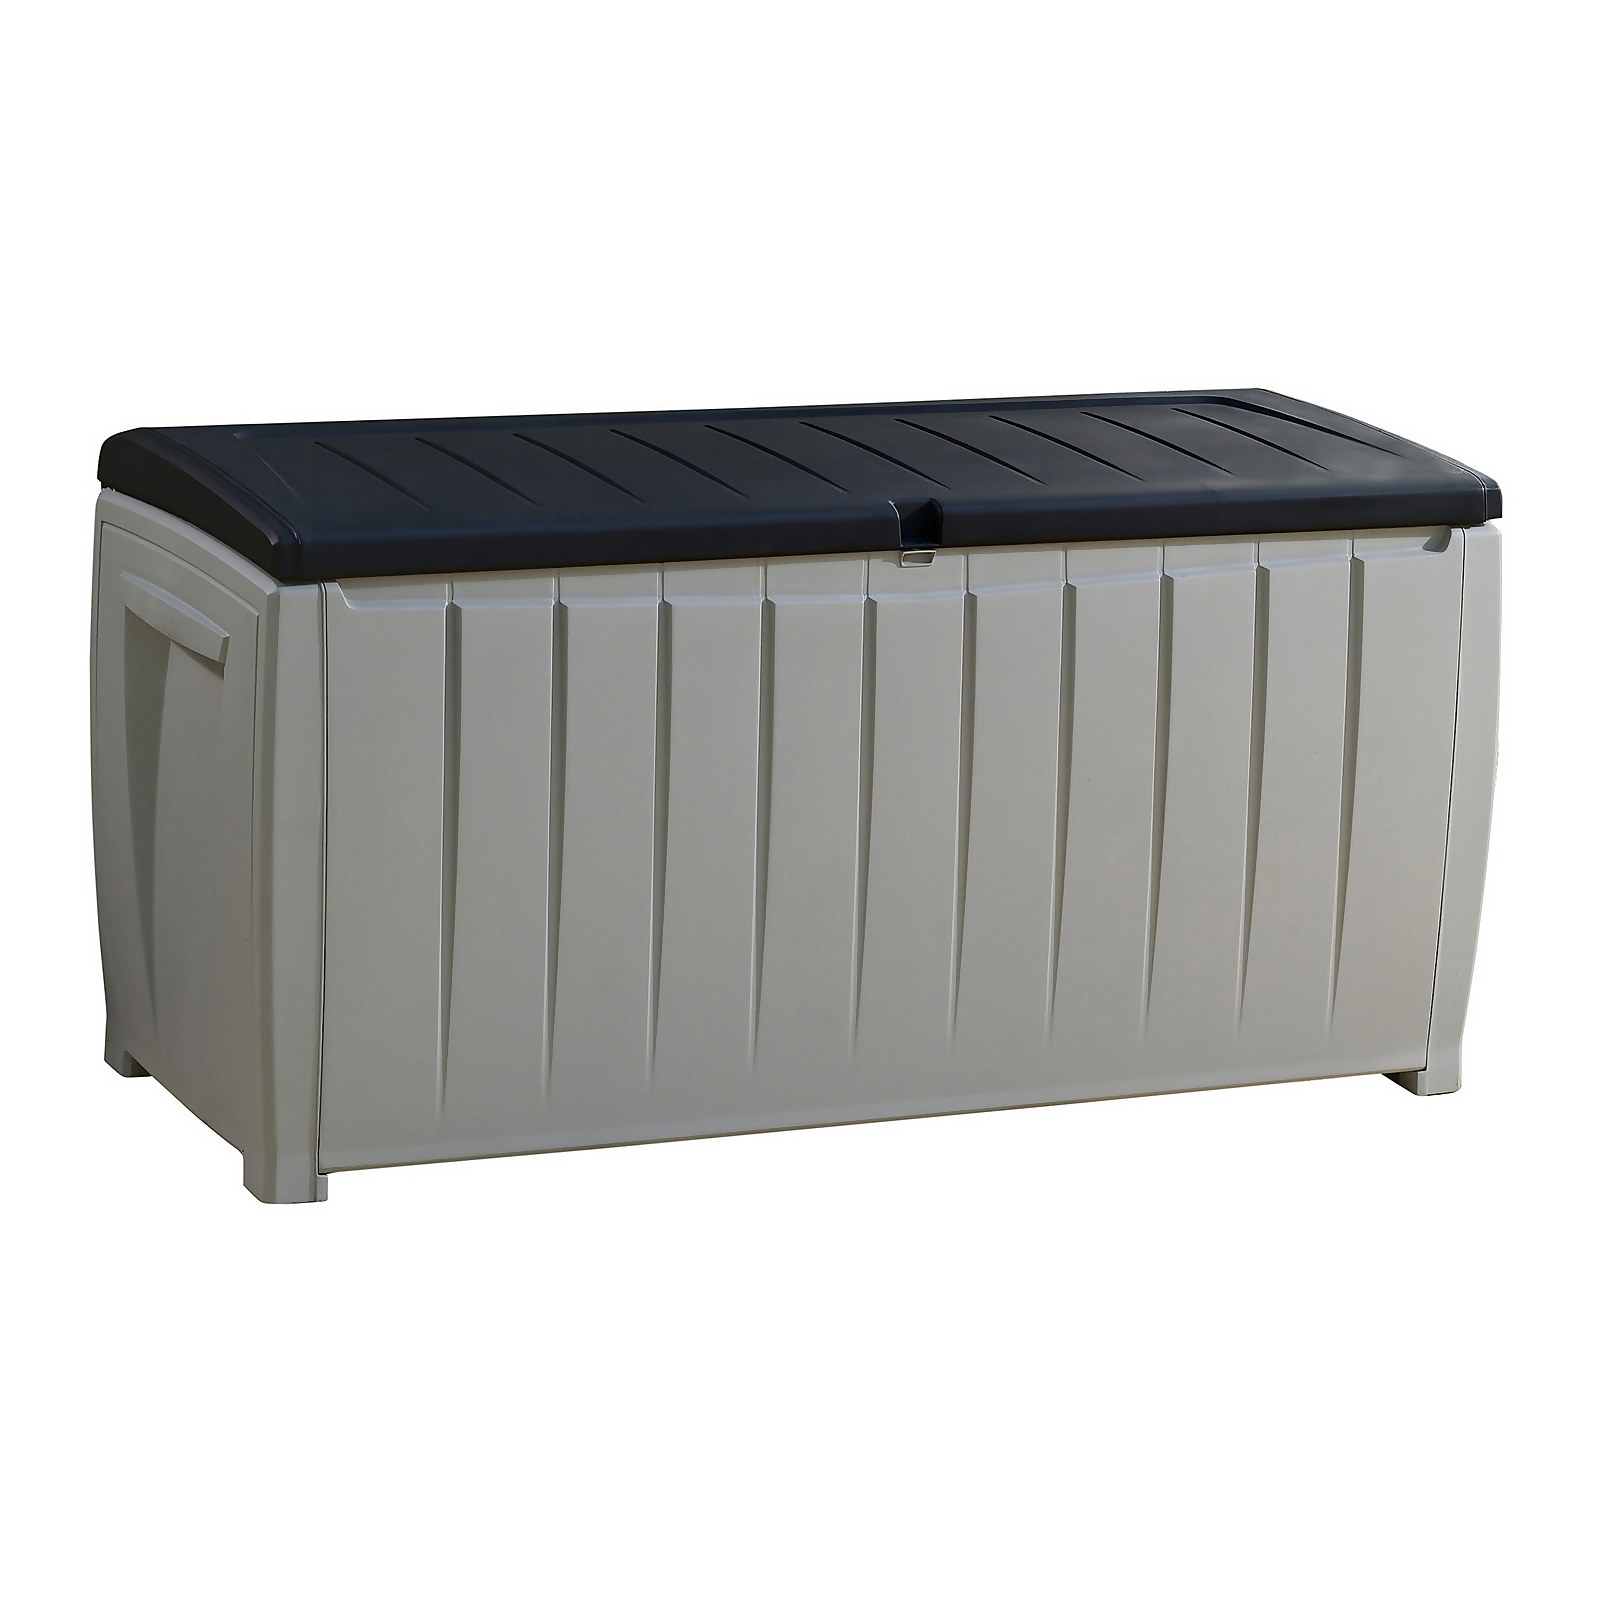 Keter Ace Outdoor Garden Storage Box 124 x 55 x 62.5 cm - Grey and Black